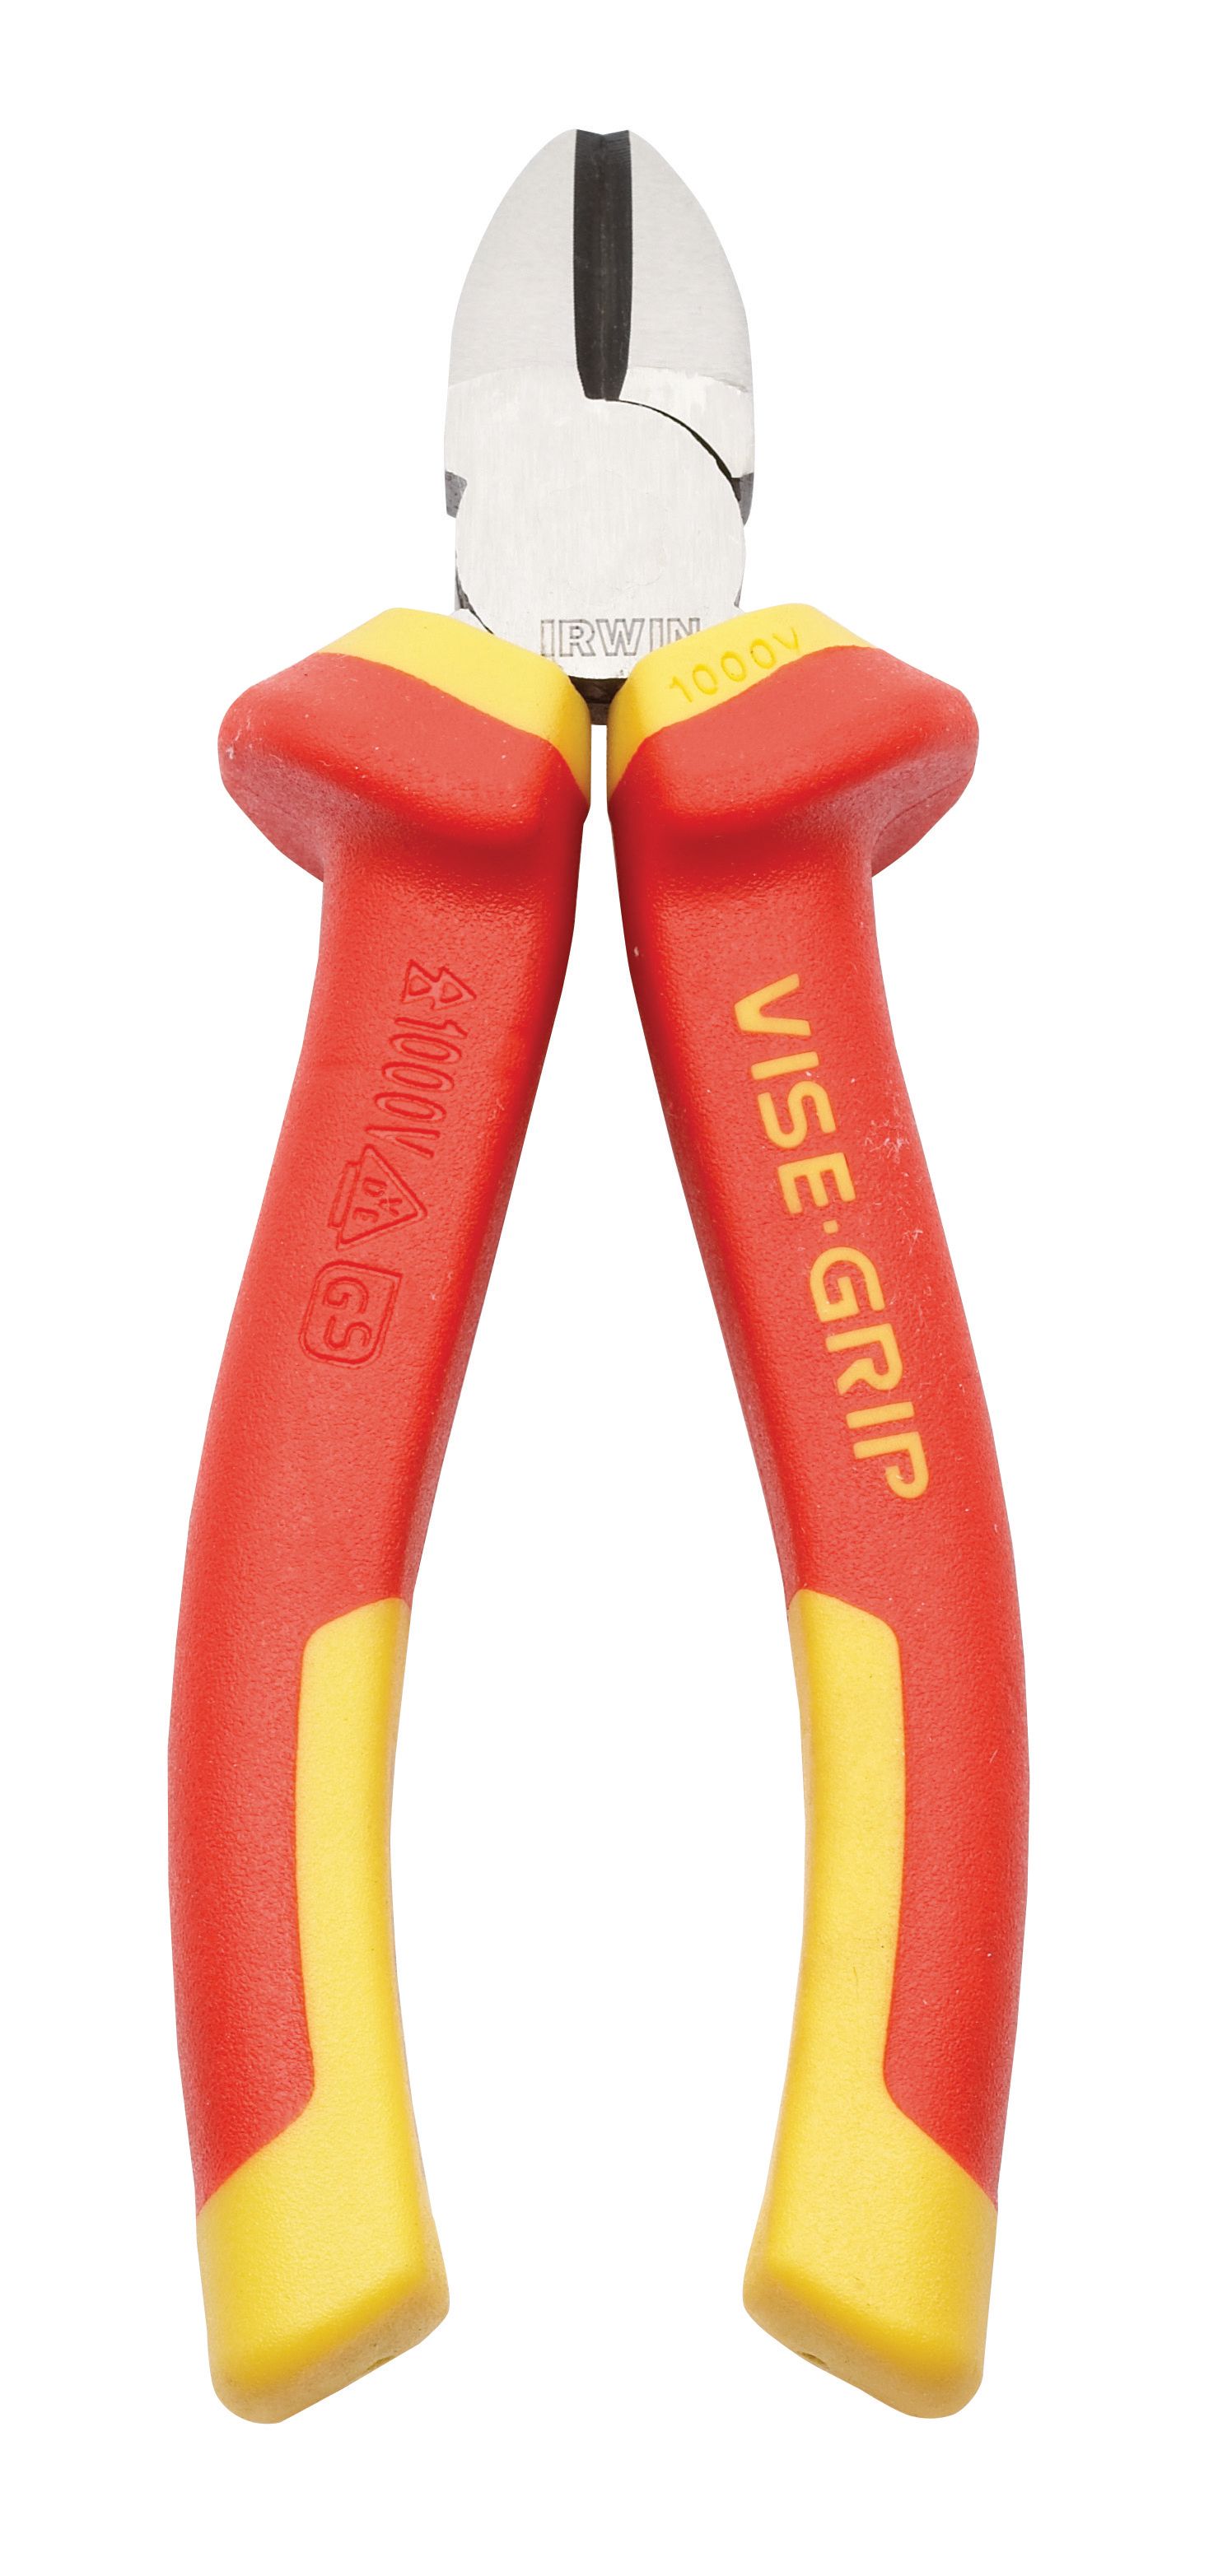 Irwin 10505865 Vice Grip VDE Diag Cut Pliers - 6in